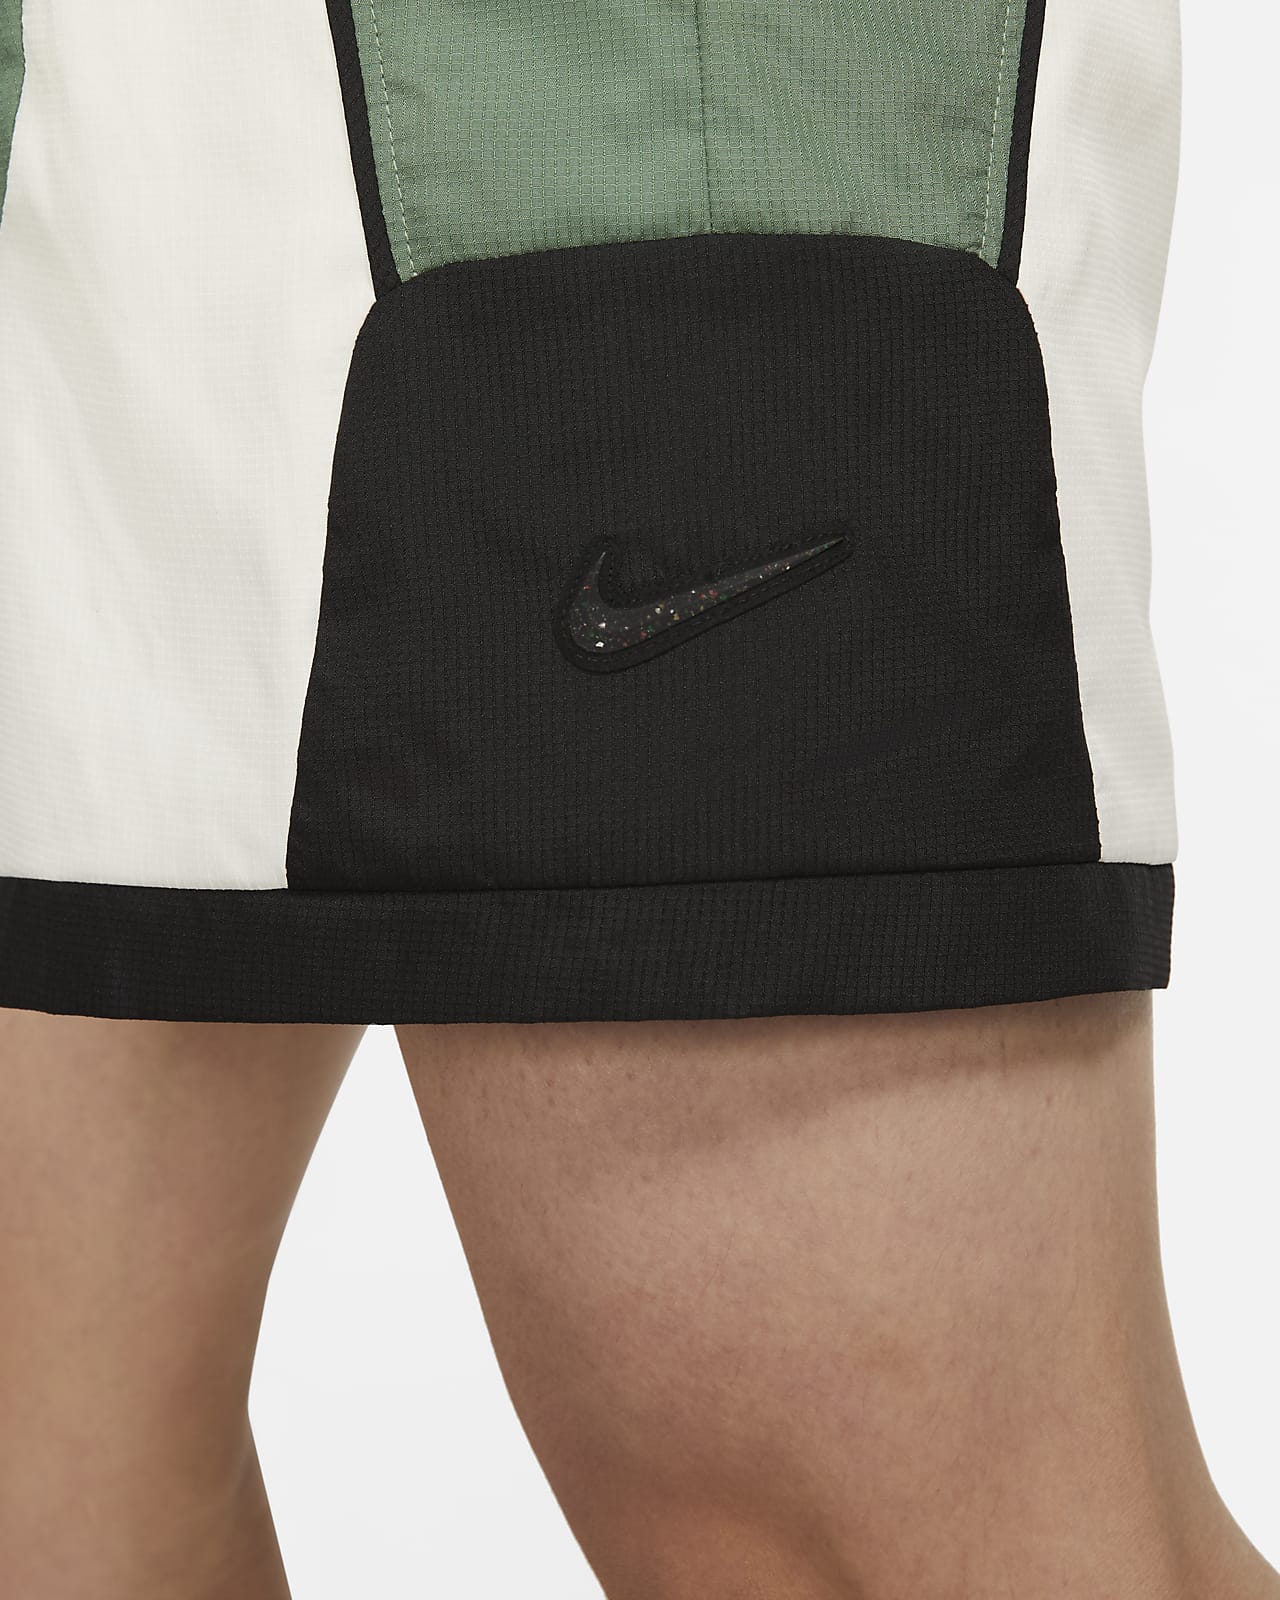 Nike Throwback Loose Fit Retro Basketball Shorts Men Size Medium Blue/Green